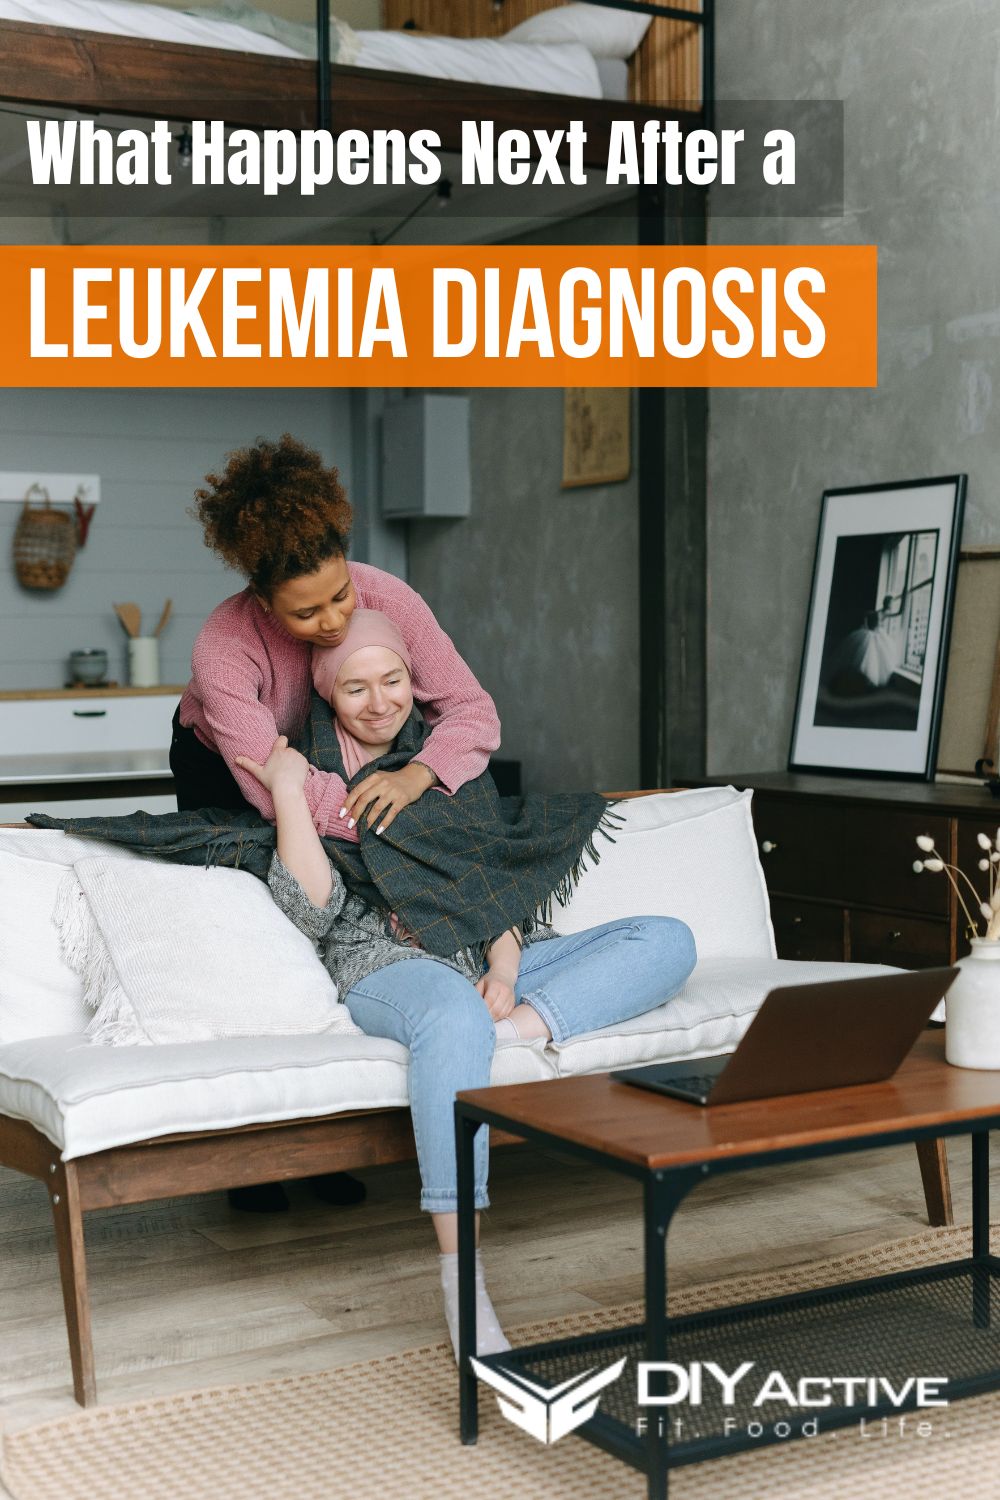 What Happens Next After a Leukemia Diagnosis?